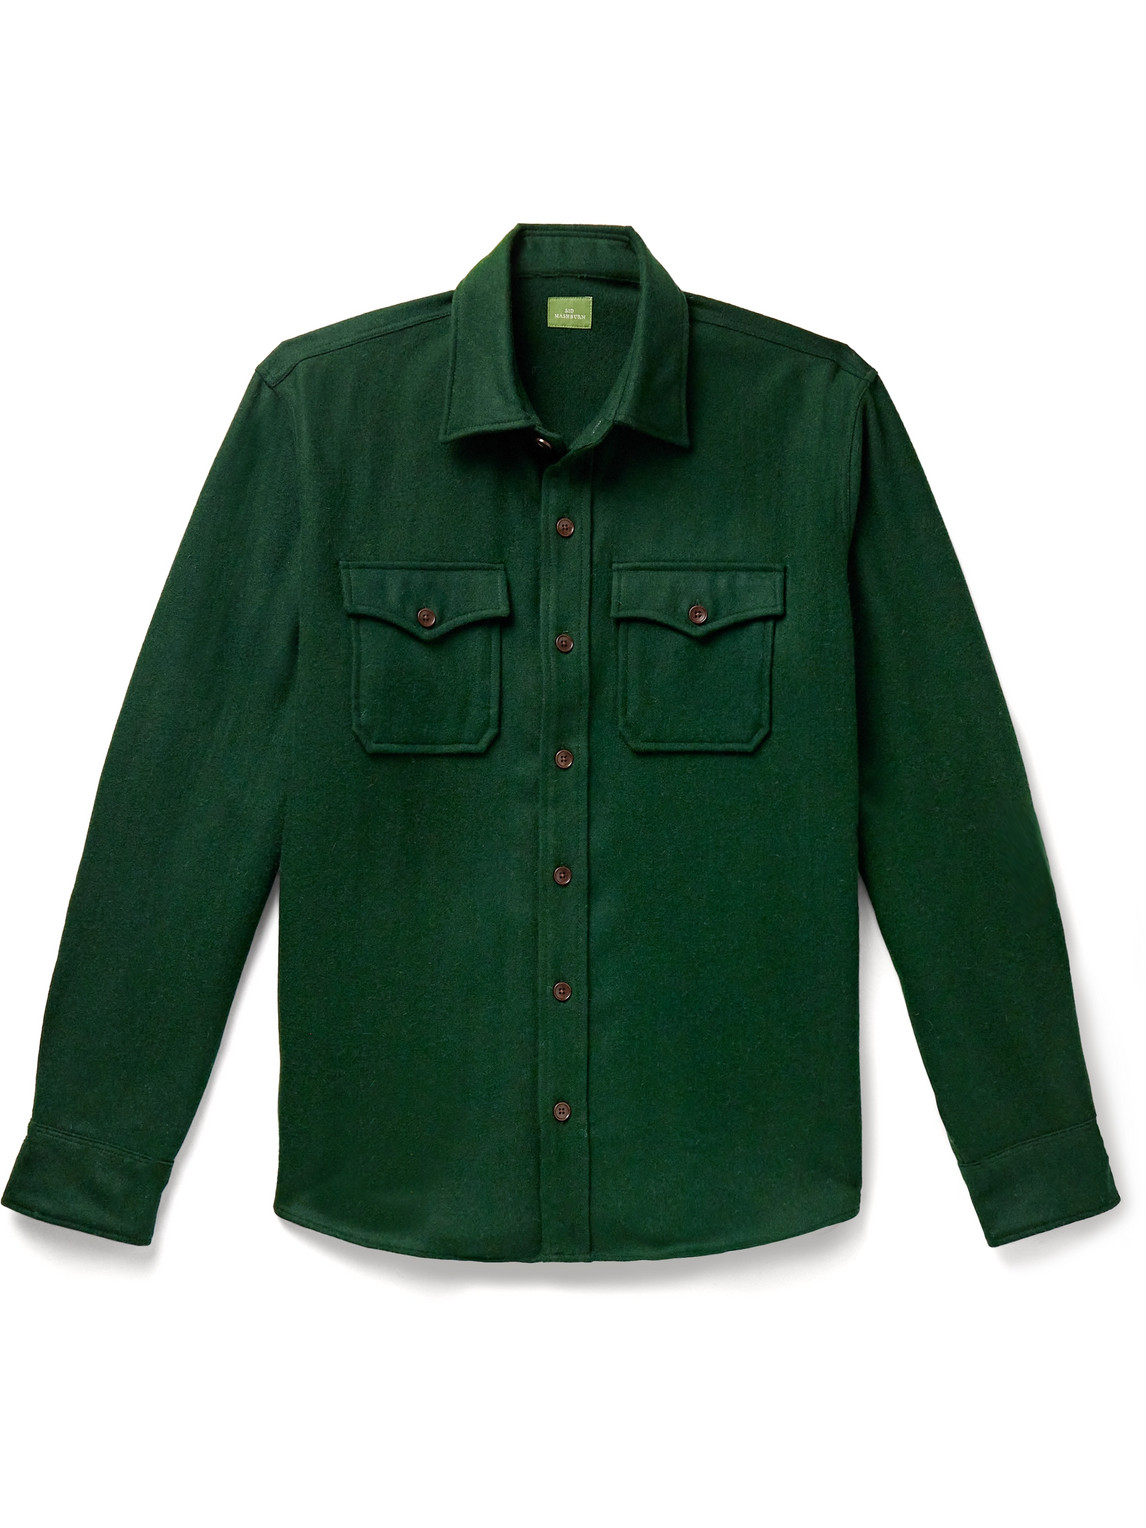 Sid Mashburn Cpo Merino Wool Shirt Jacket In Green